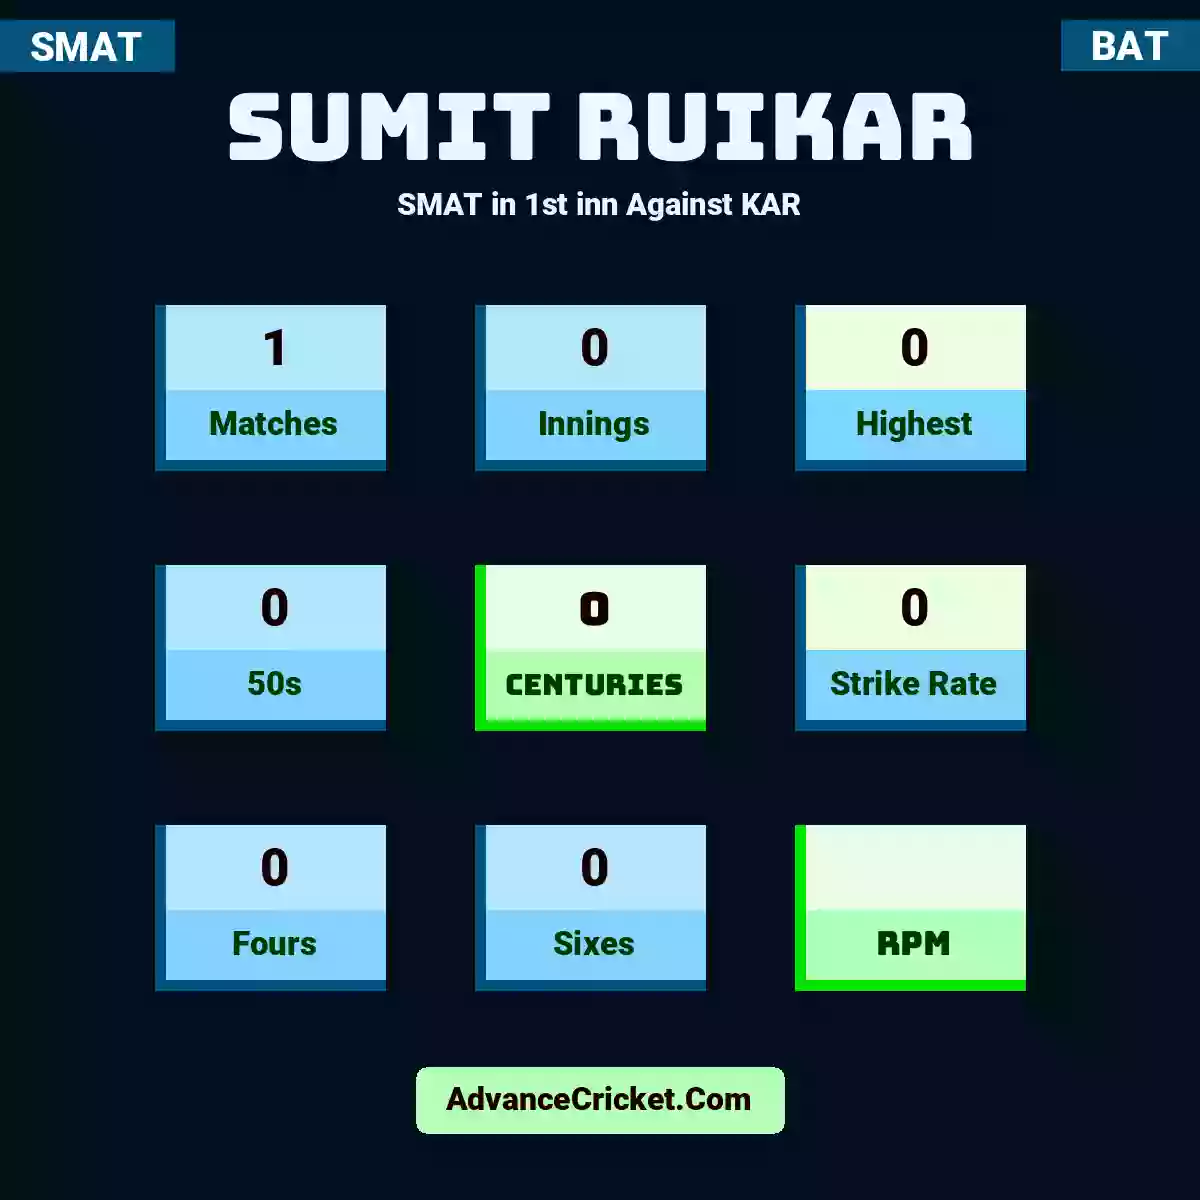 Sumit Ruikar SMAT  in 1st inn Against KAR, Sumit Ruikar played 1 matches, scored 0 runs as highest, 0 half-centuries, and 0 centuries, with a strike rate of 0. S.Ruikar hit 0 fours and 0 sixes.